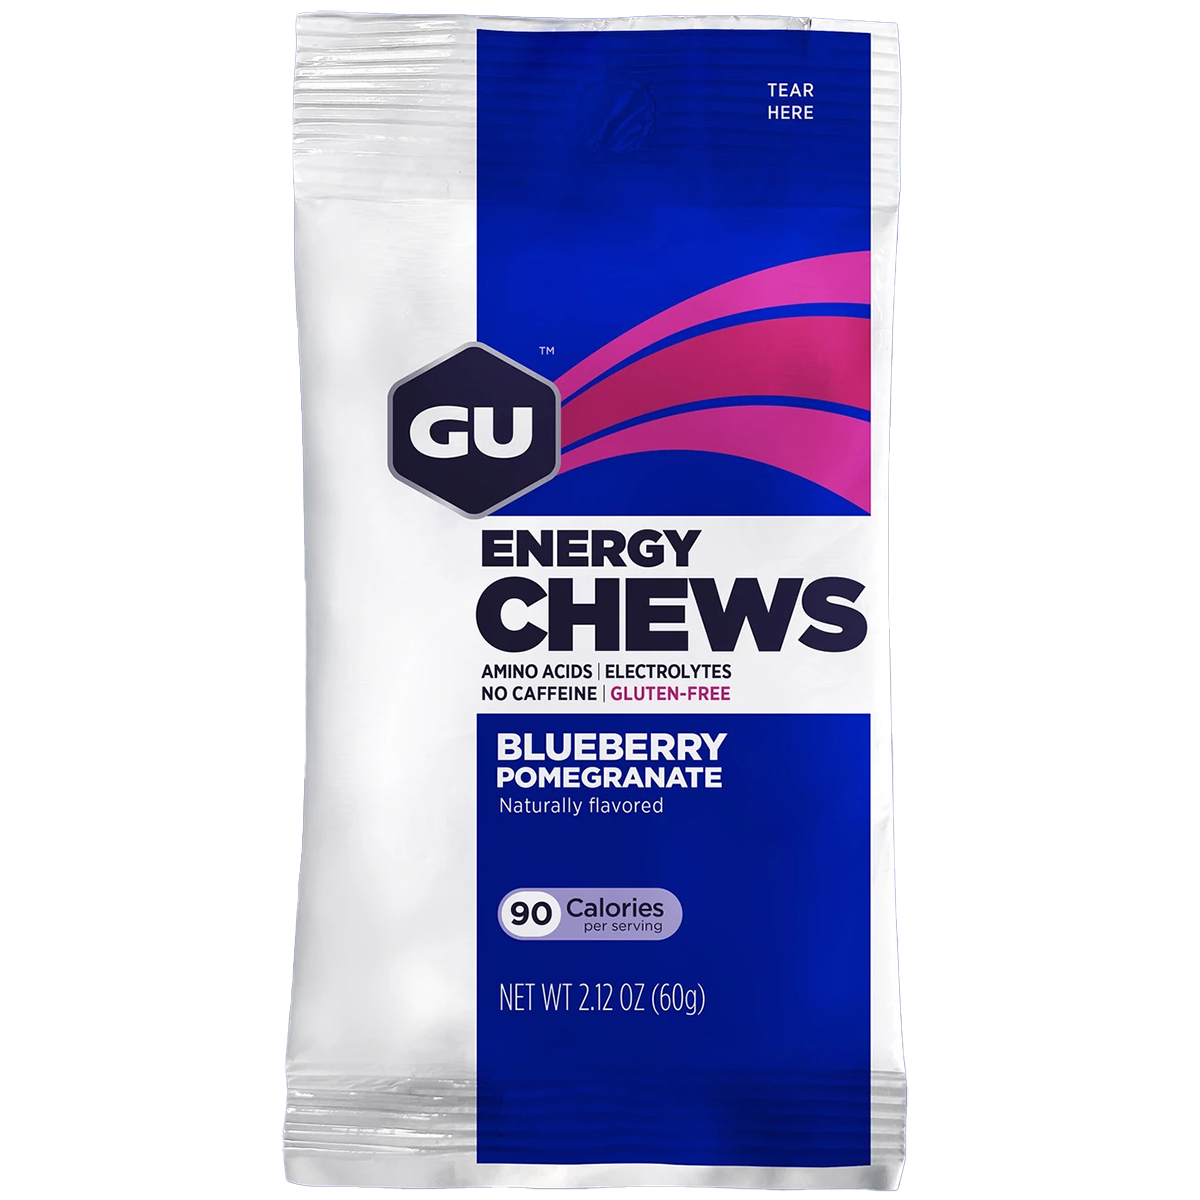 GU Energy Chews - Bags alternate view